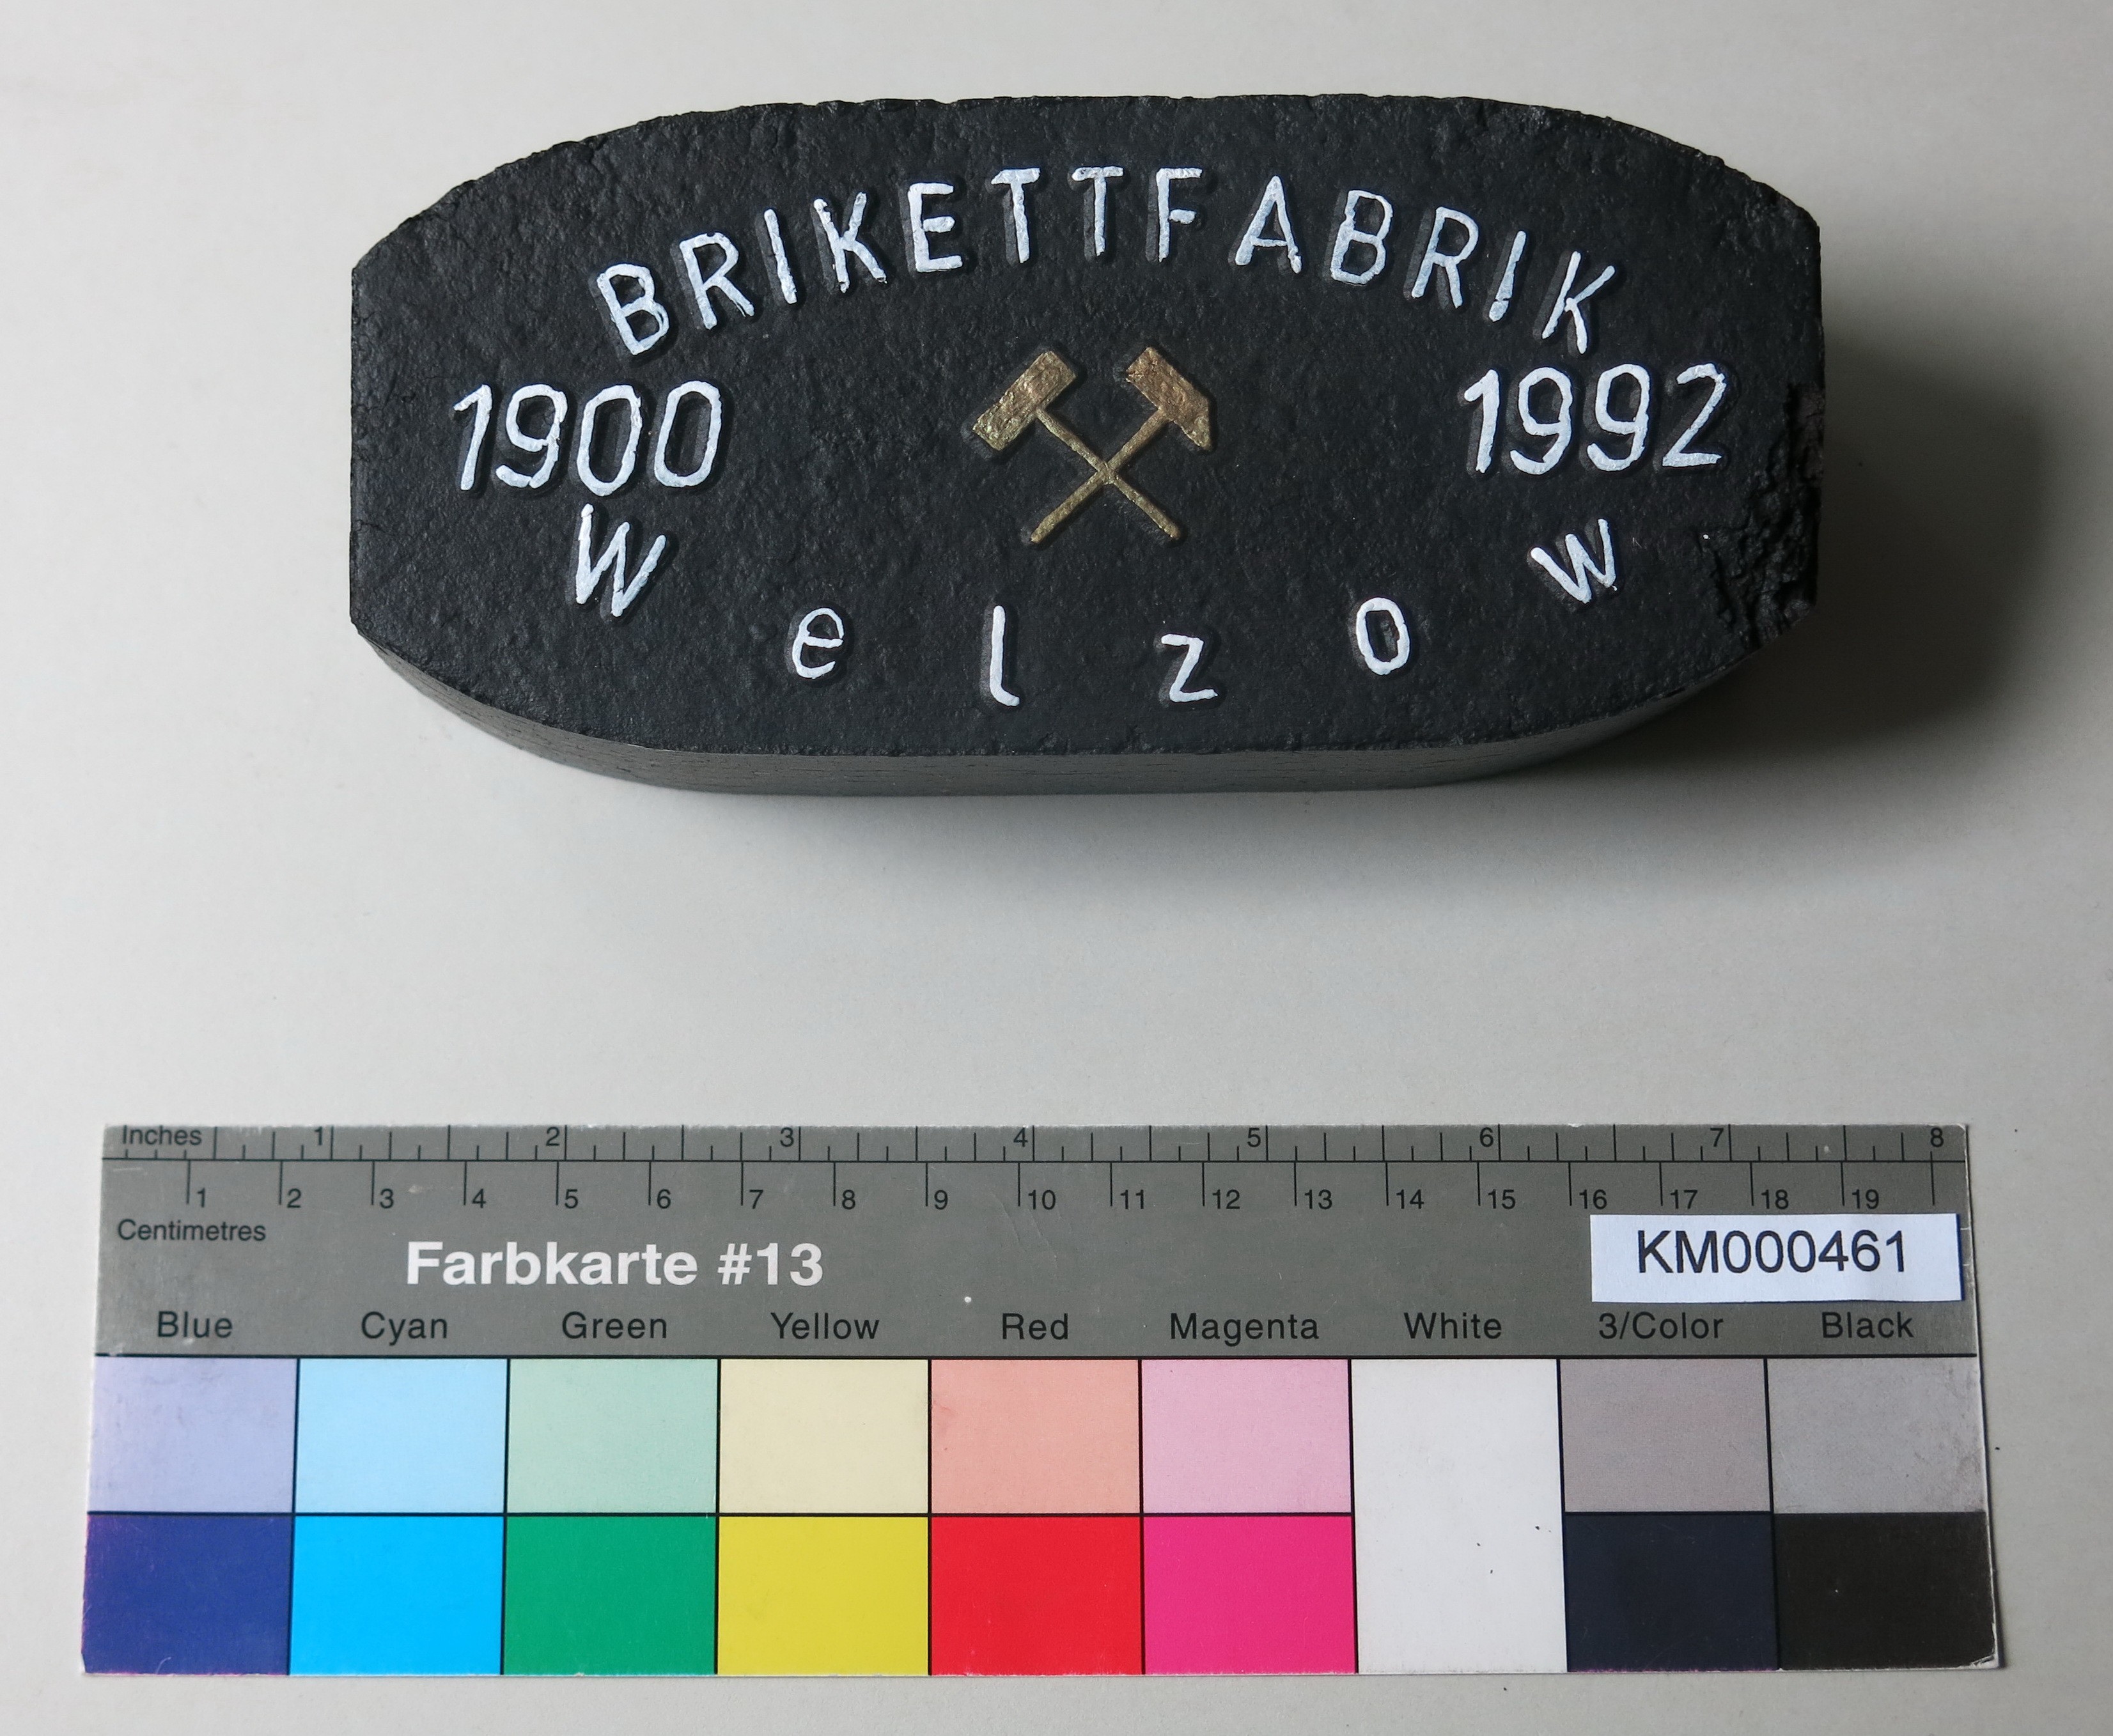 Zierbrikett "BRIKETTFABRIK Welzow 1900 1992" (Energiefabrik Knappenrode CC BY-SA)